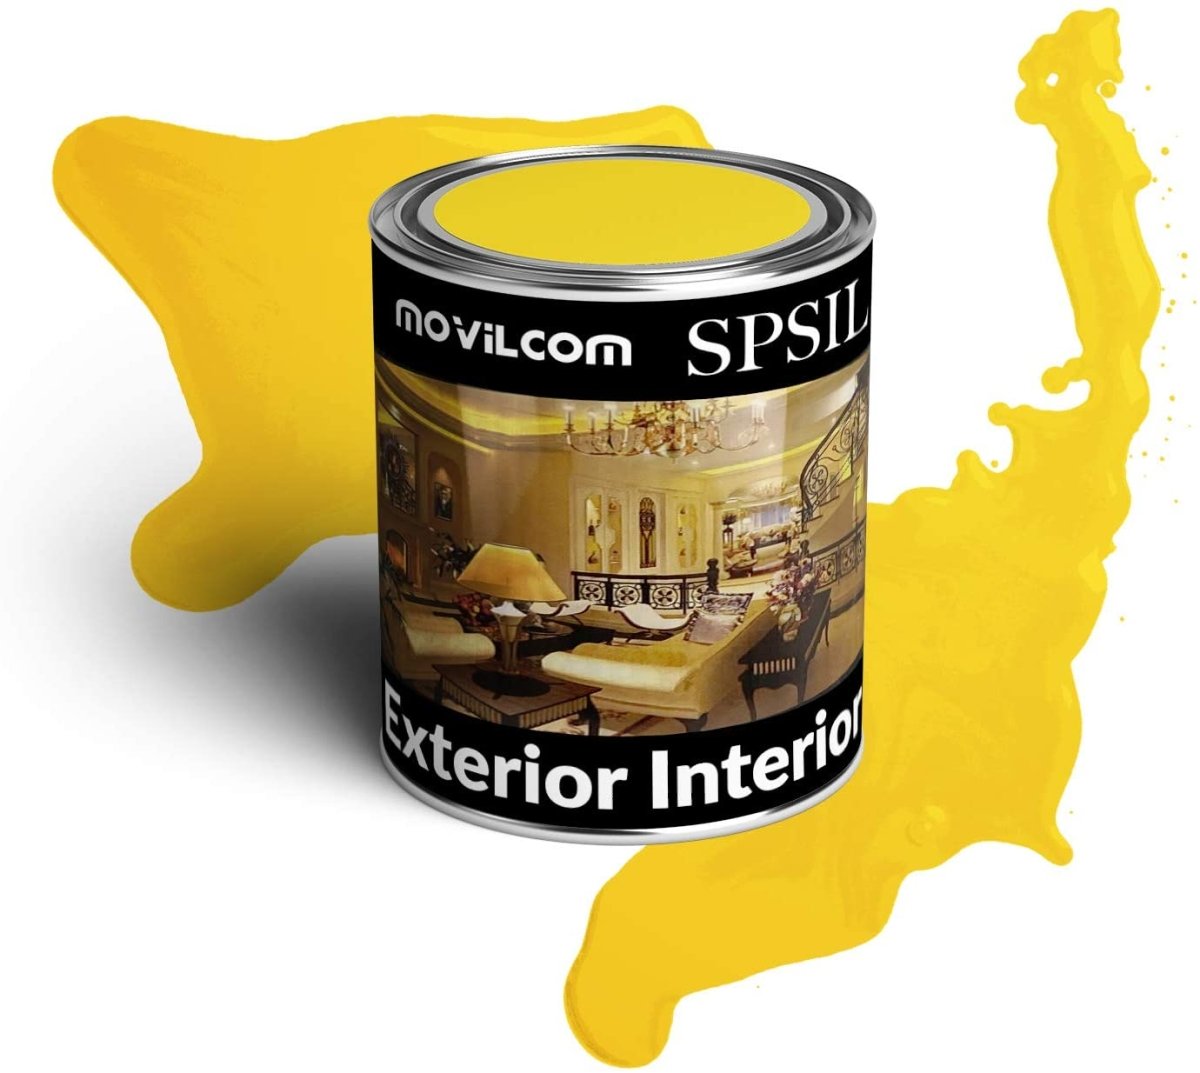 Bote de pintura alquídica esmalte interior exterior color Amarillo limón - 125ml, mod.8740 - movilcom.com